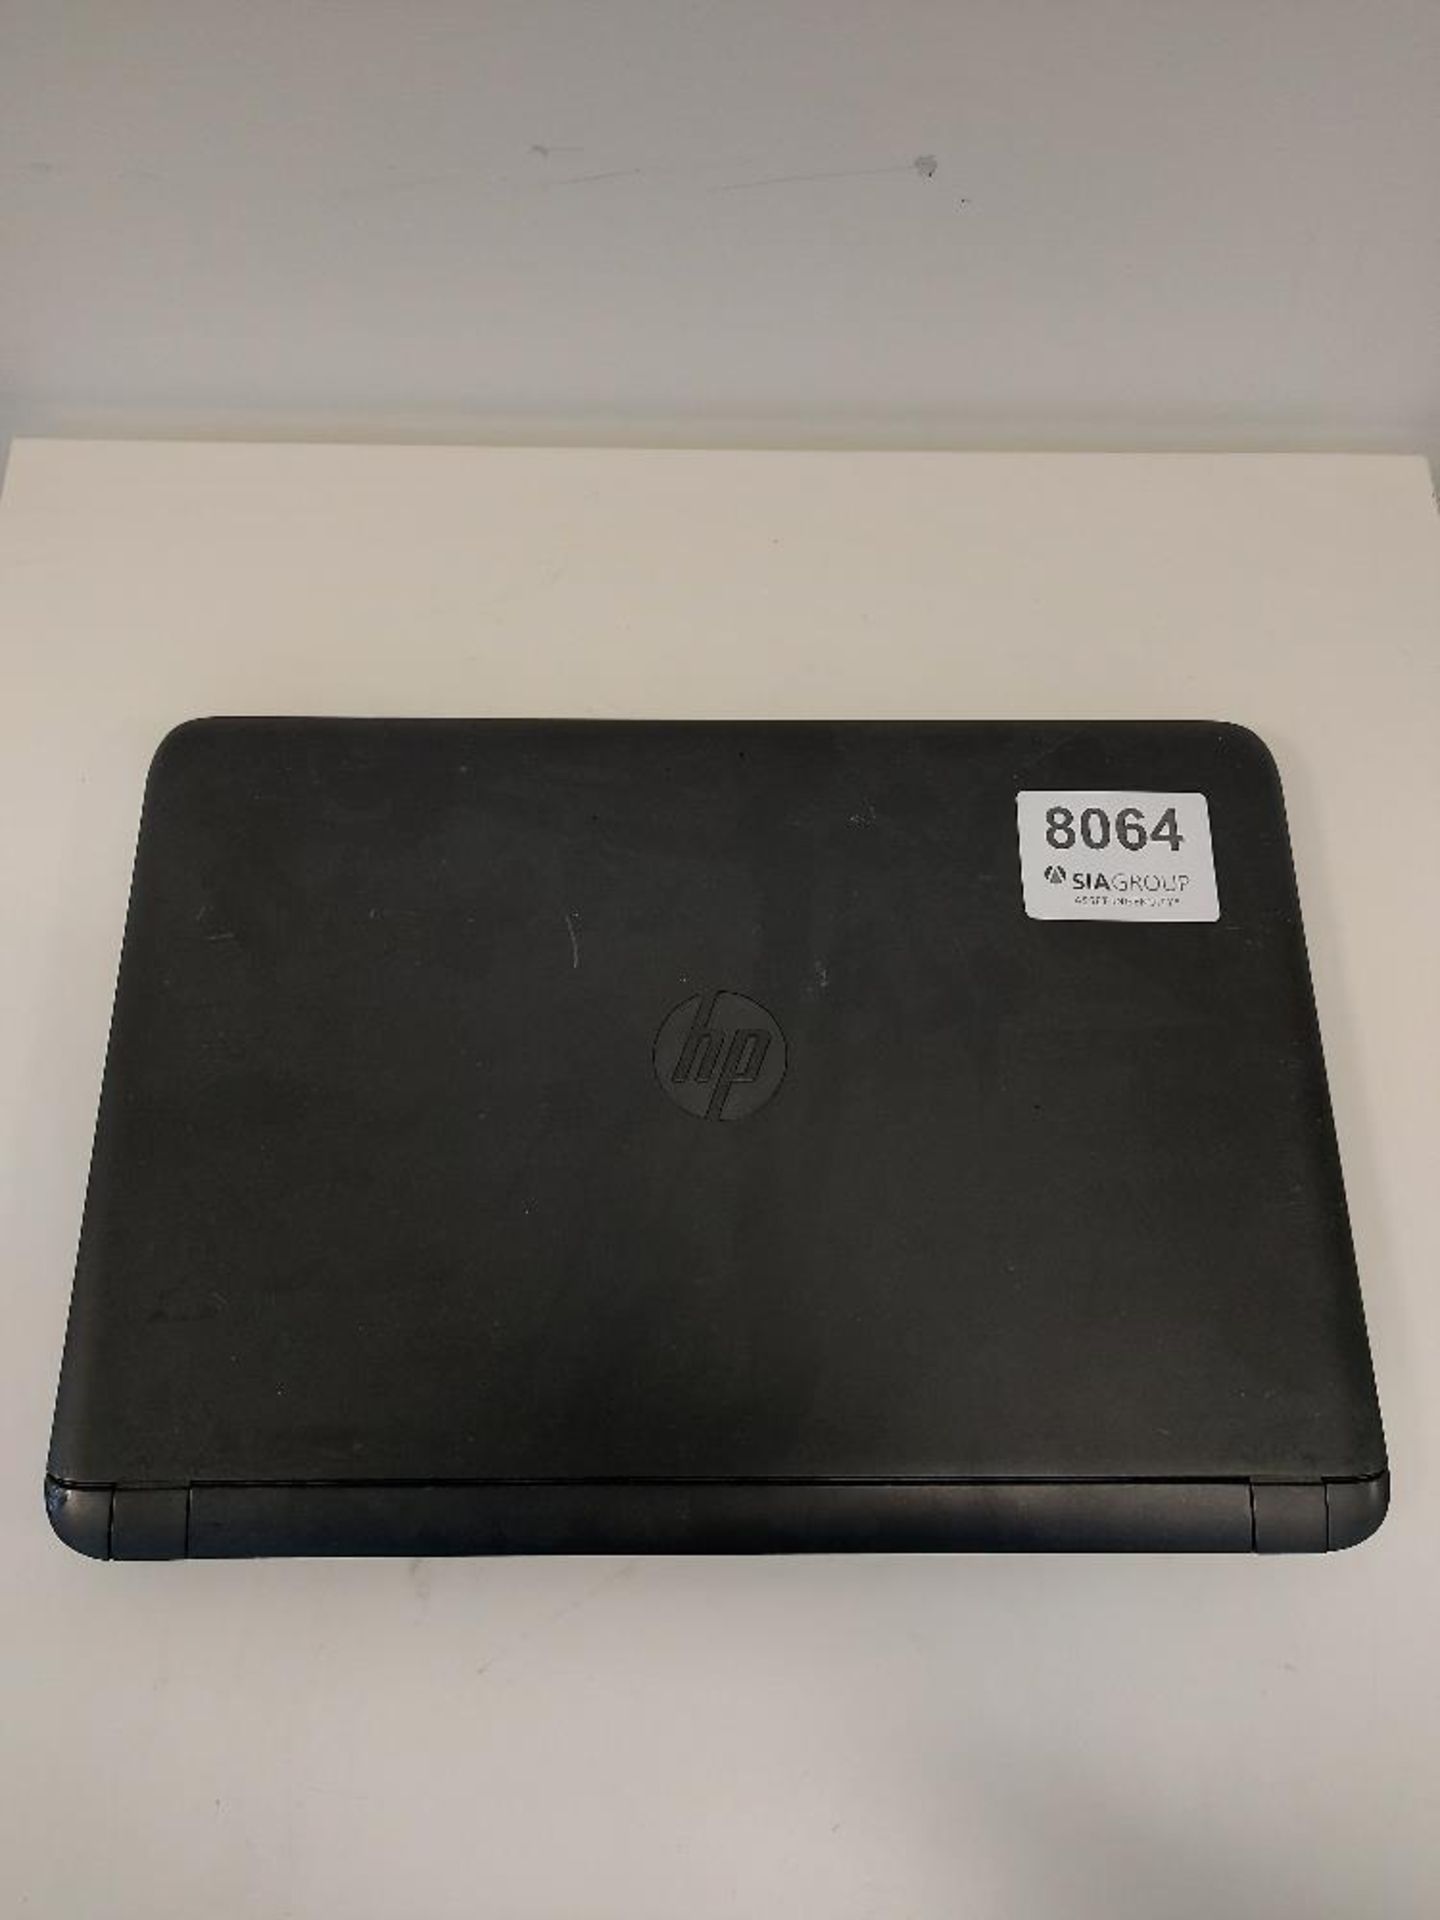 HP Pavilion Laptop - Image 3 of 4